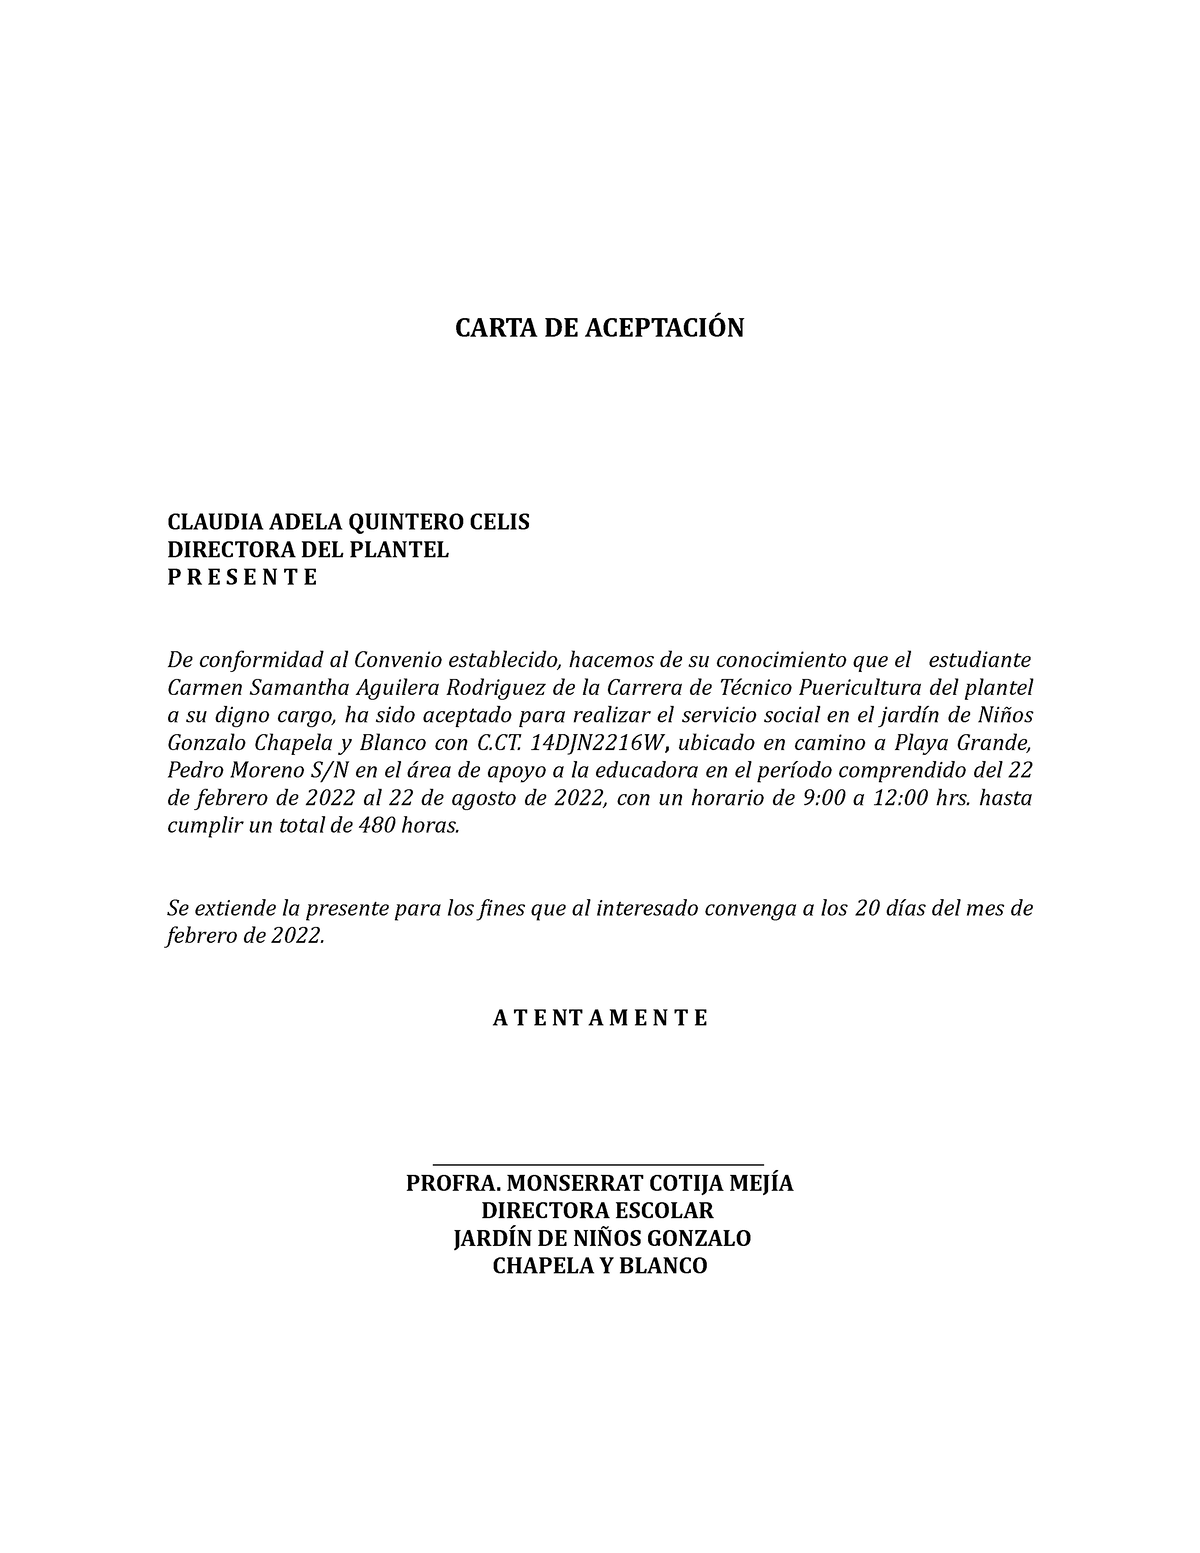 Carta de aceptación VER 1 - CARTA DE ACEPTACIÓN CLAUDIA ADELA QUINTERO ...